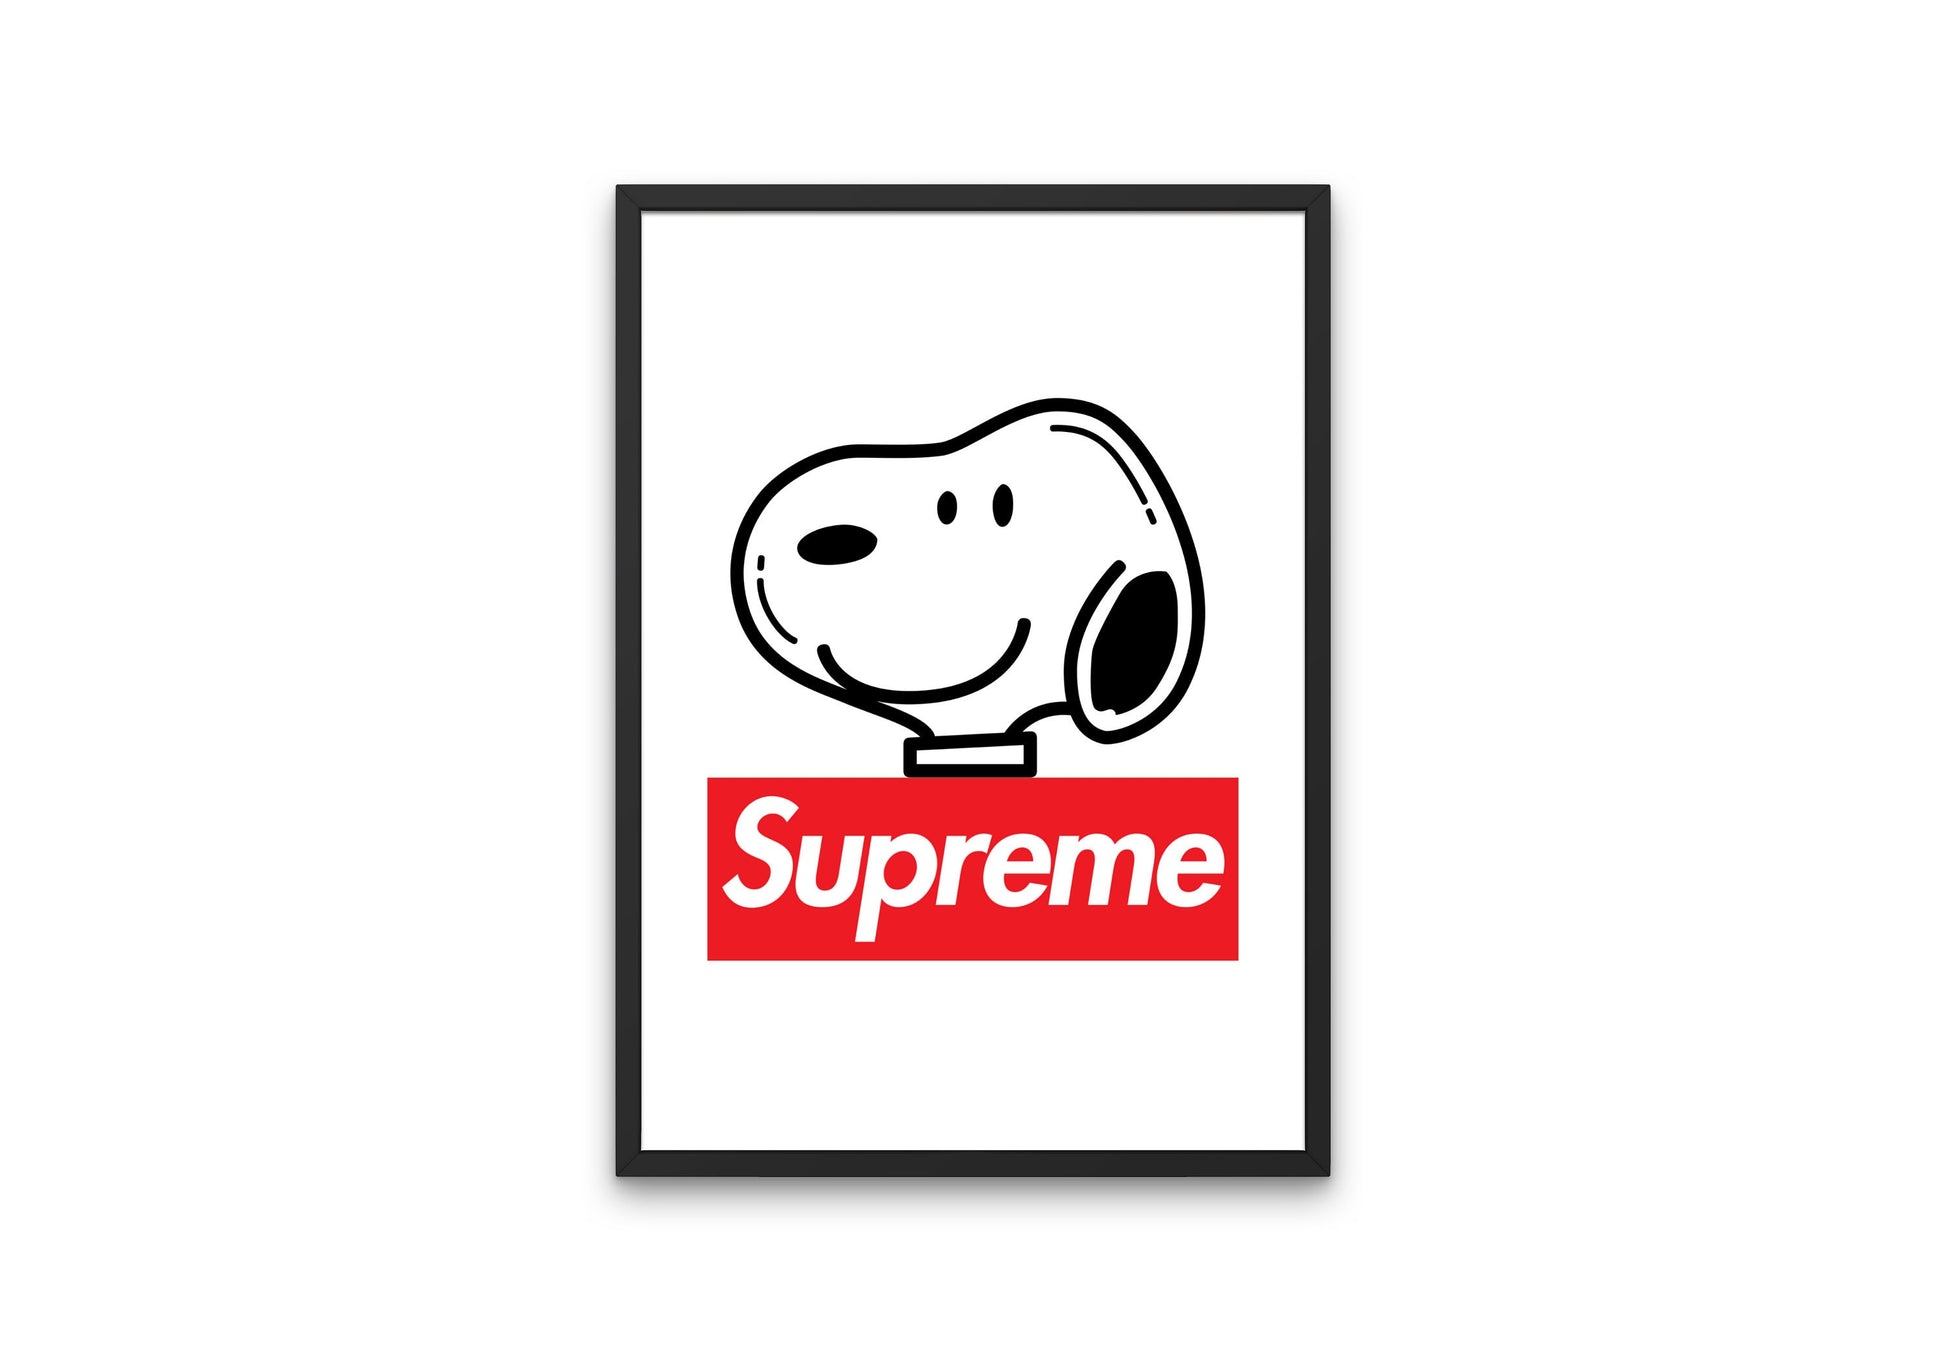 Supreme Snoopy Print INSTANT DOWNLOAD, hypebeast poster, Streetwear Art, Modern Wall Art, pop culture wall art, sporty print, snoopy decor